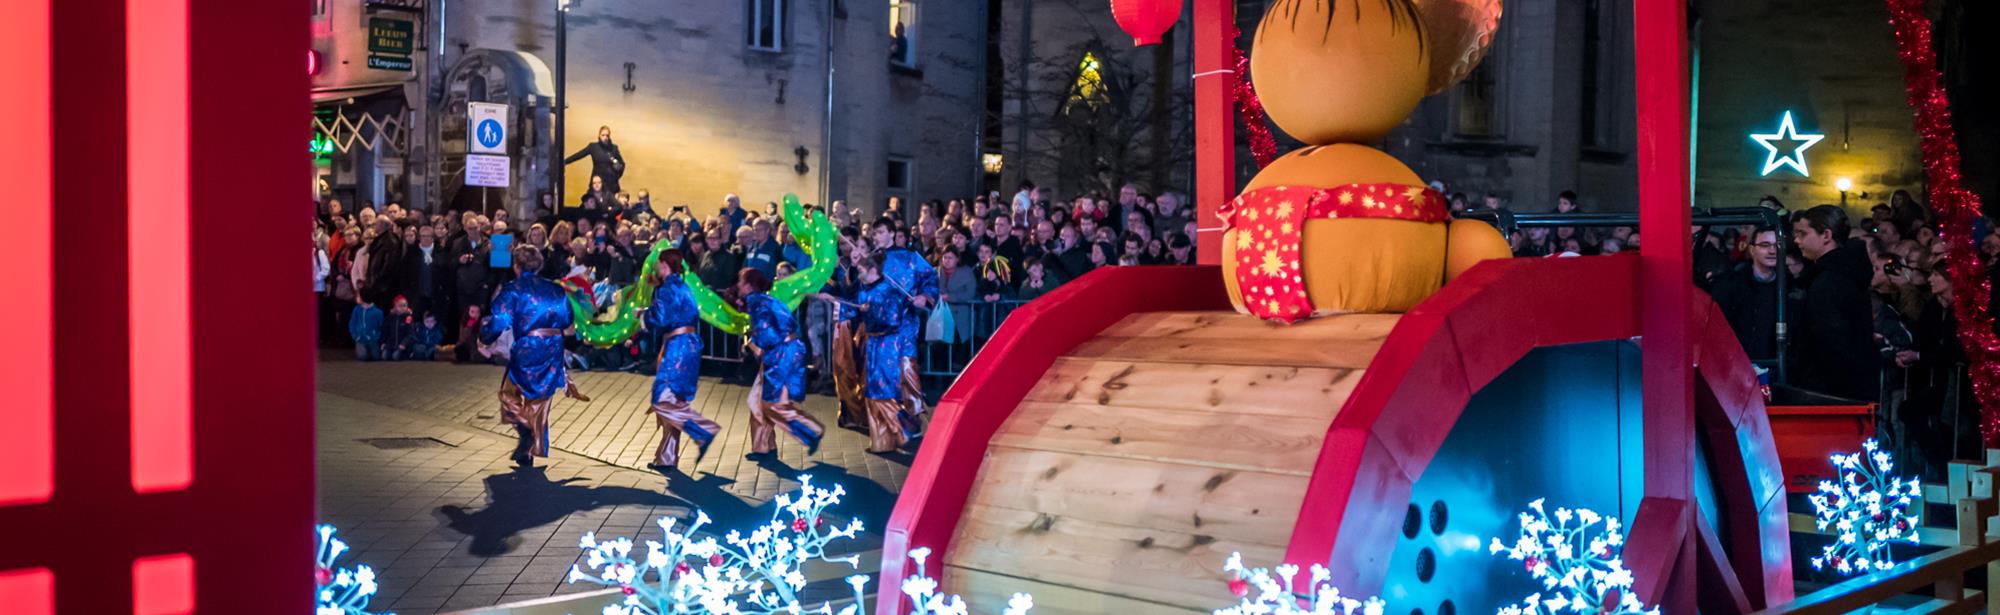 Valkenburg wint Europese Kerstaward